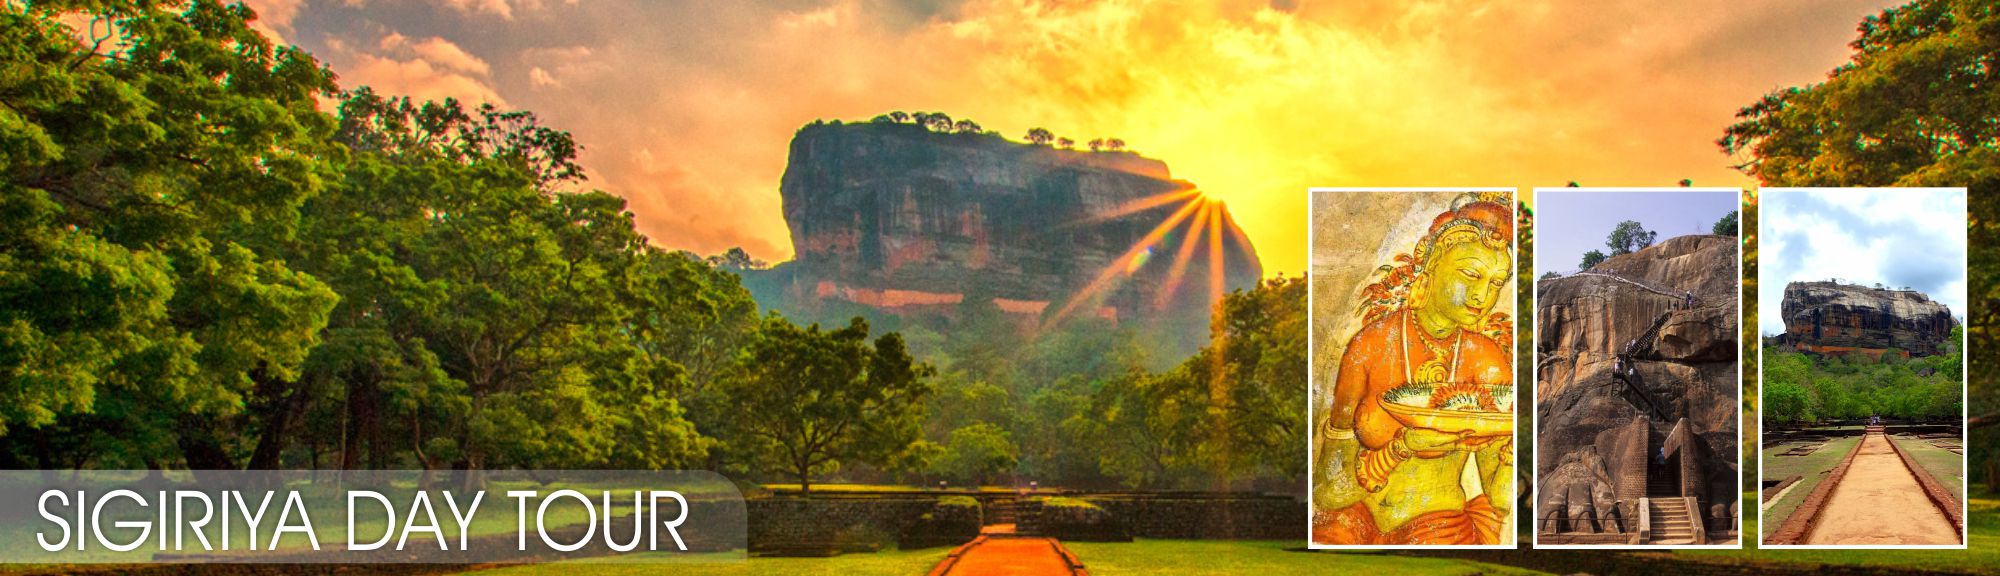 Sigiriya Rock Fortress Day Tour Package | walklankatours.com 